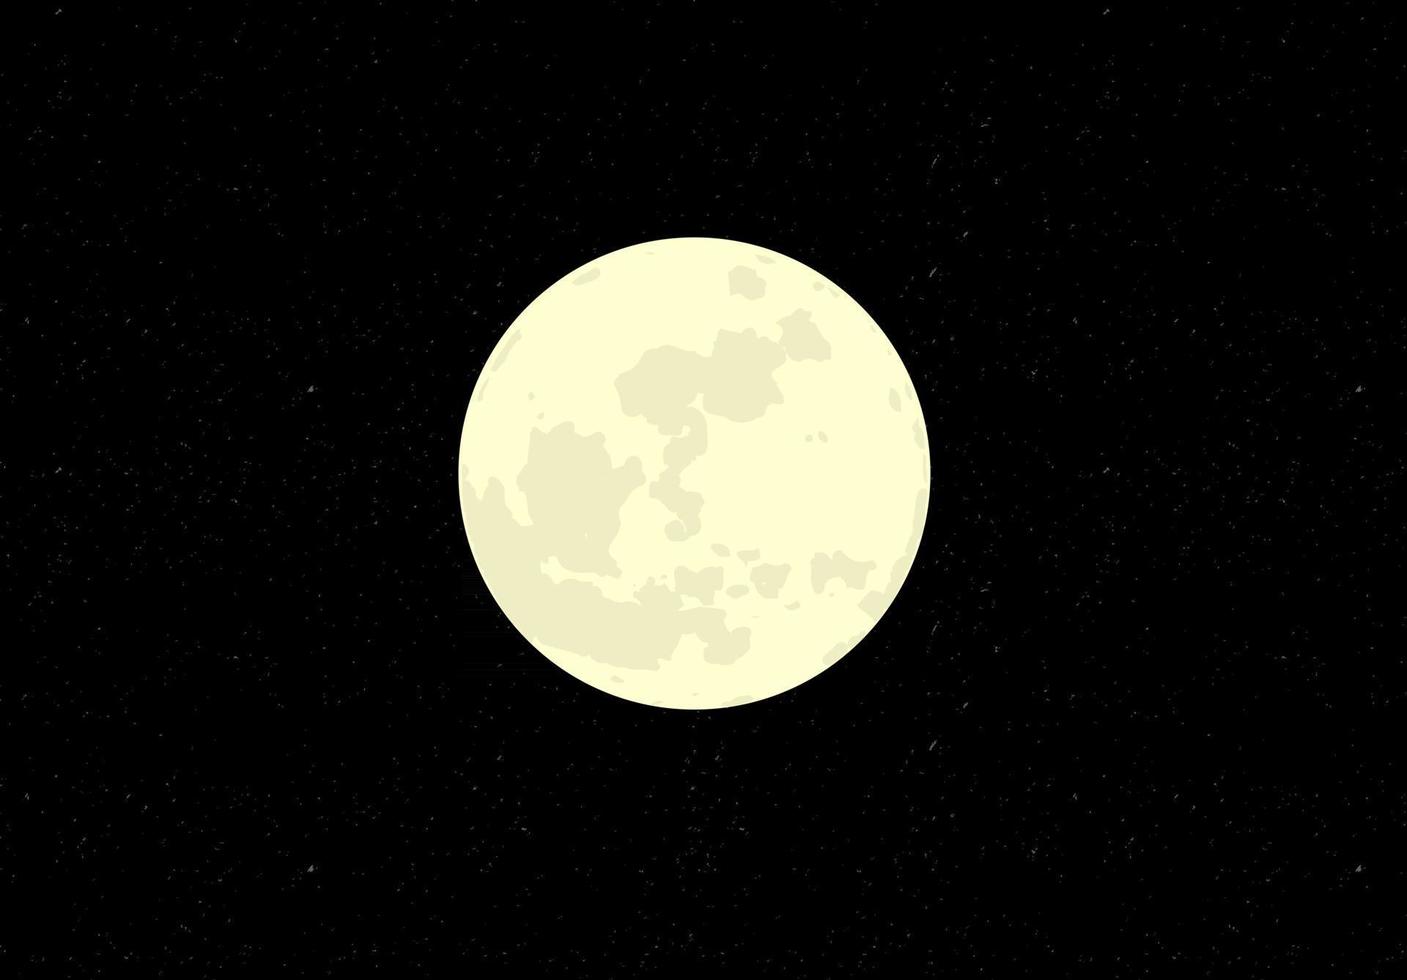 Vollmond am Nachthimmel kostenlose Vektor-Illustration Hintergrunddesign vektor